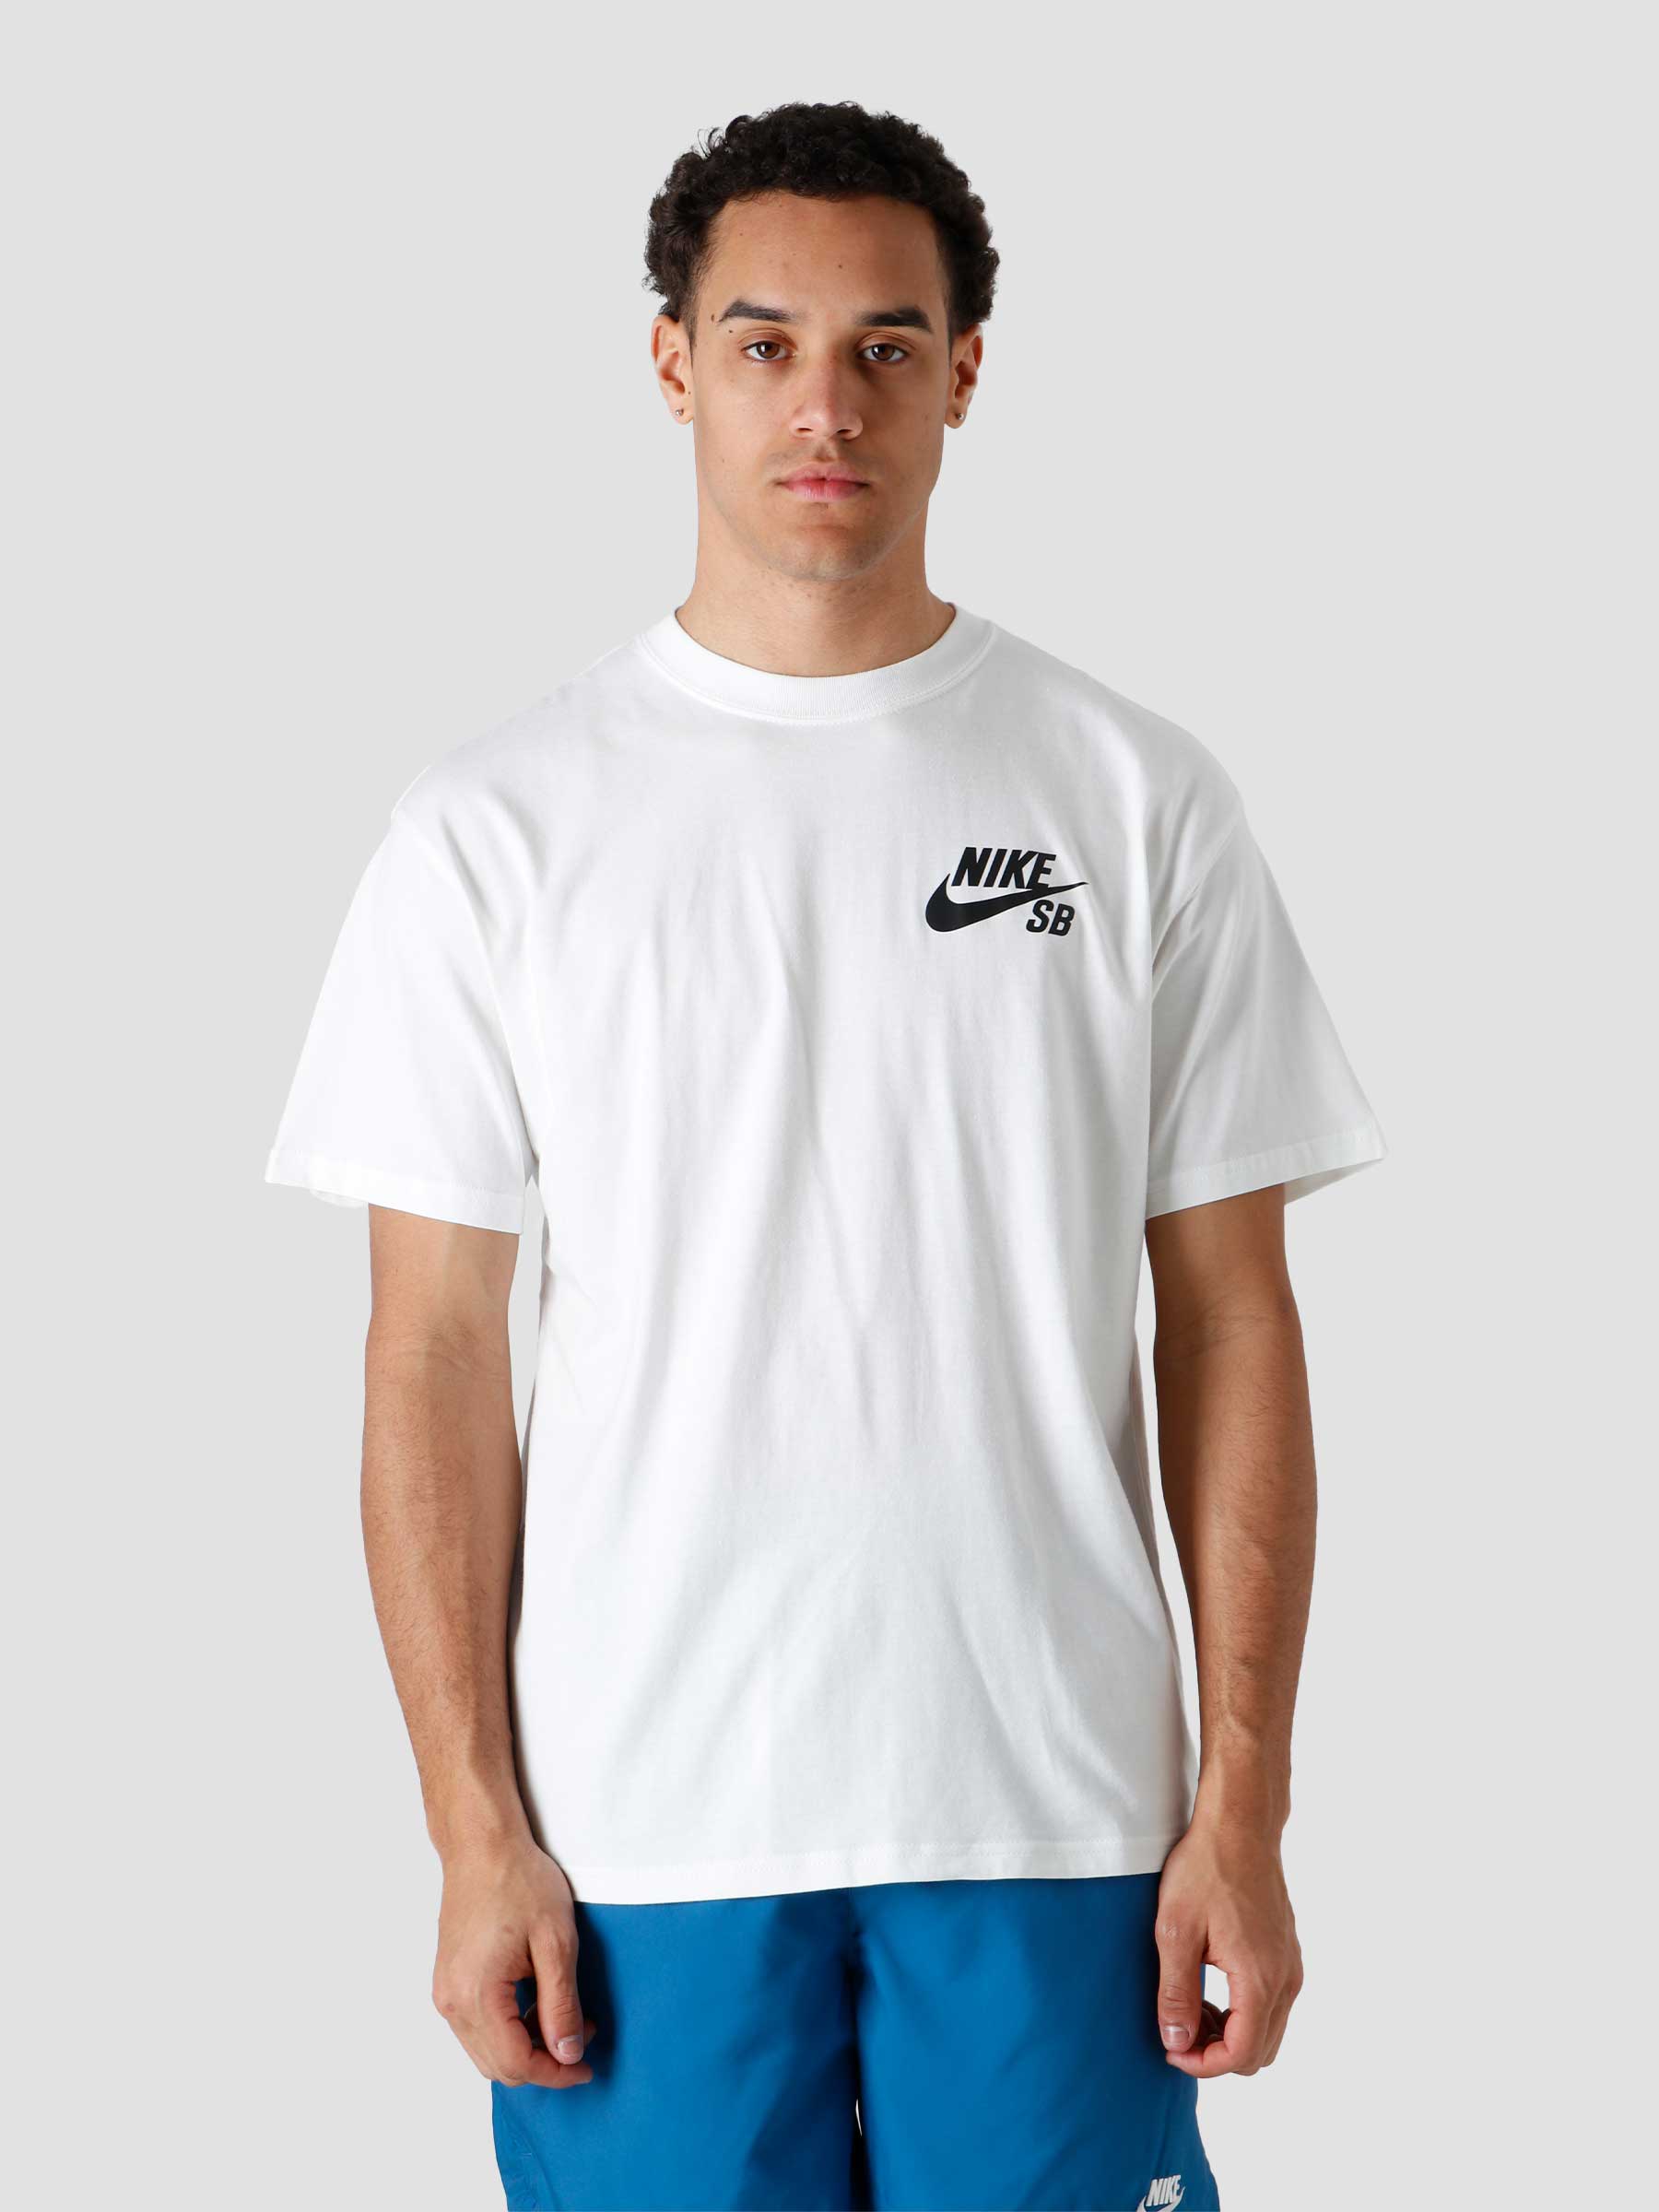 M Nk SB T-Shirt Logo White Black - Freshcotton